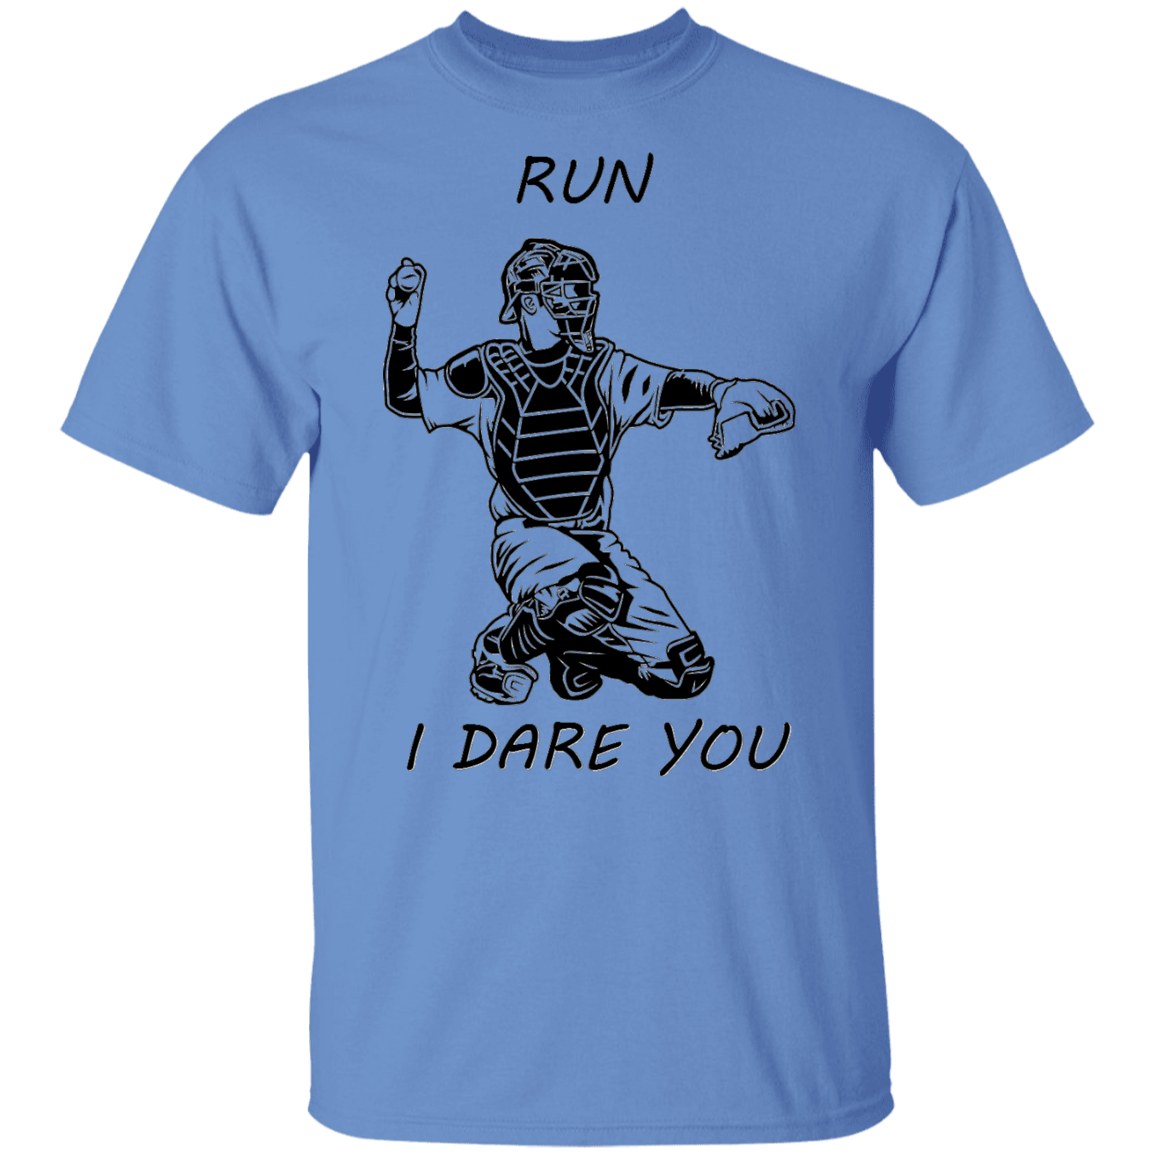 Baseball catcher - run - T-Shirt (youth)